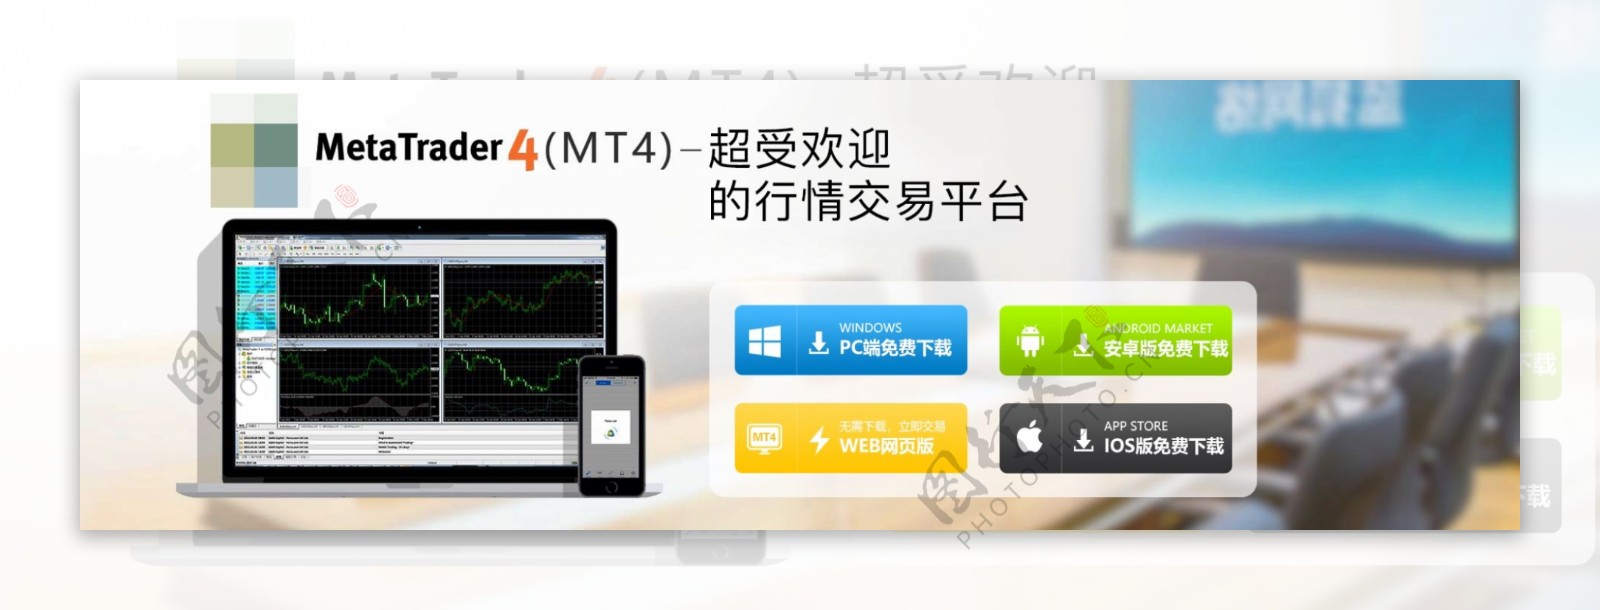 mt4交易平台banner设计